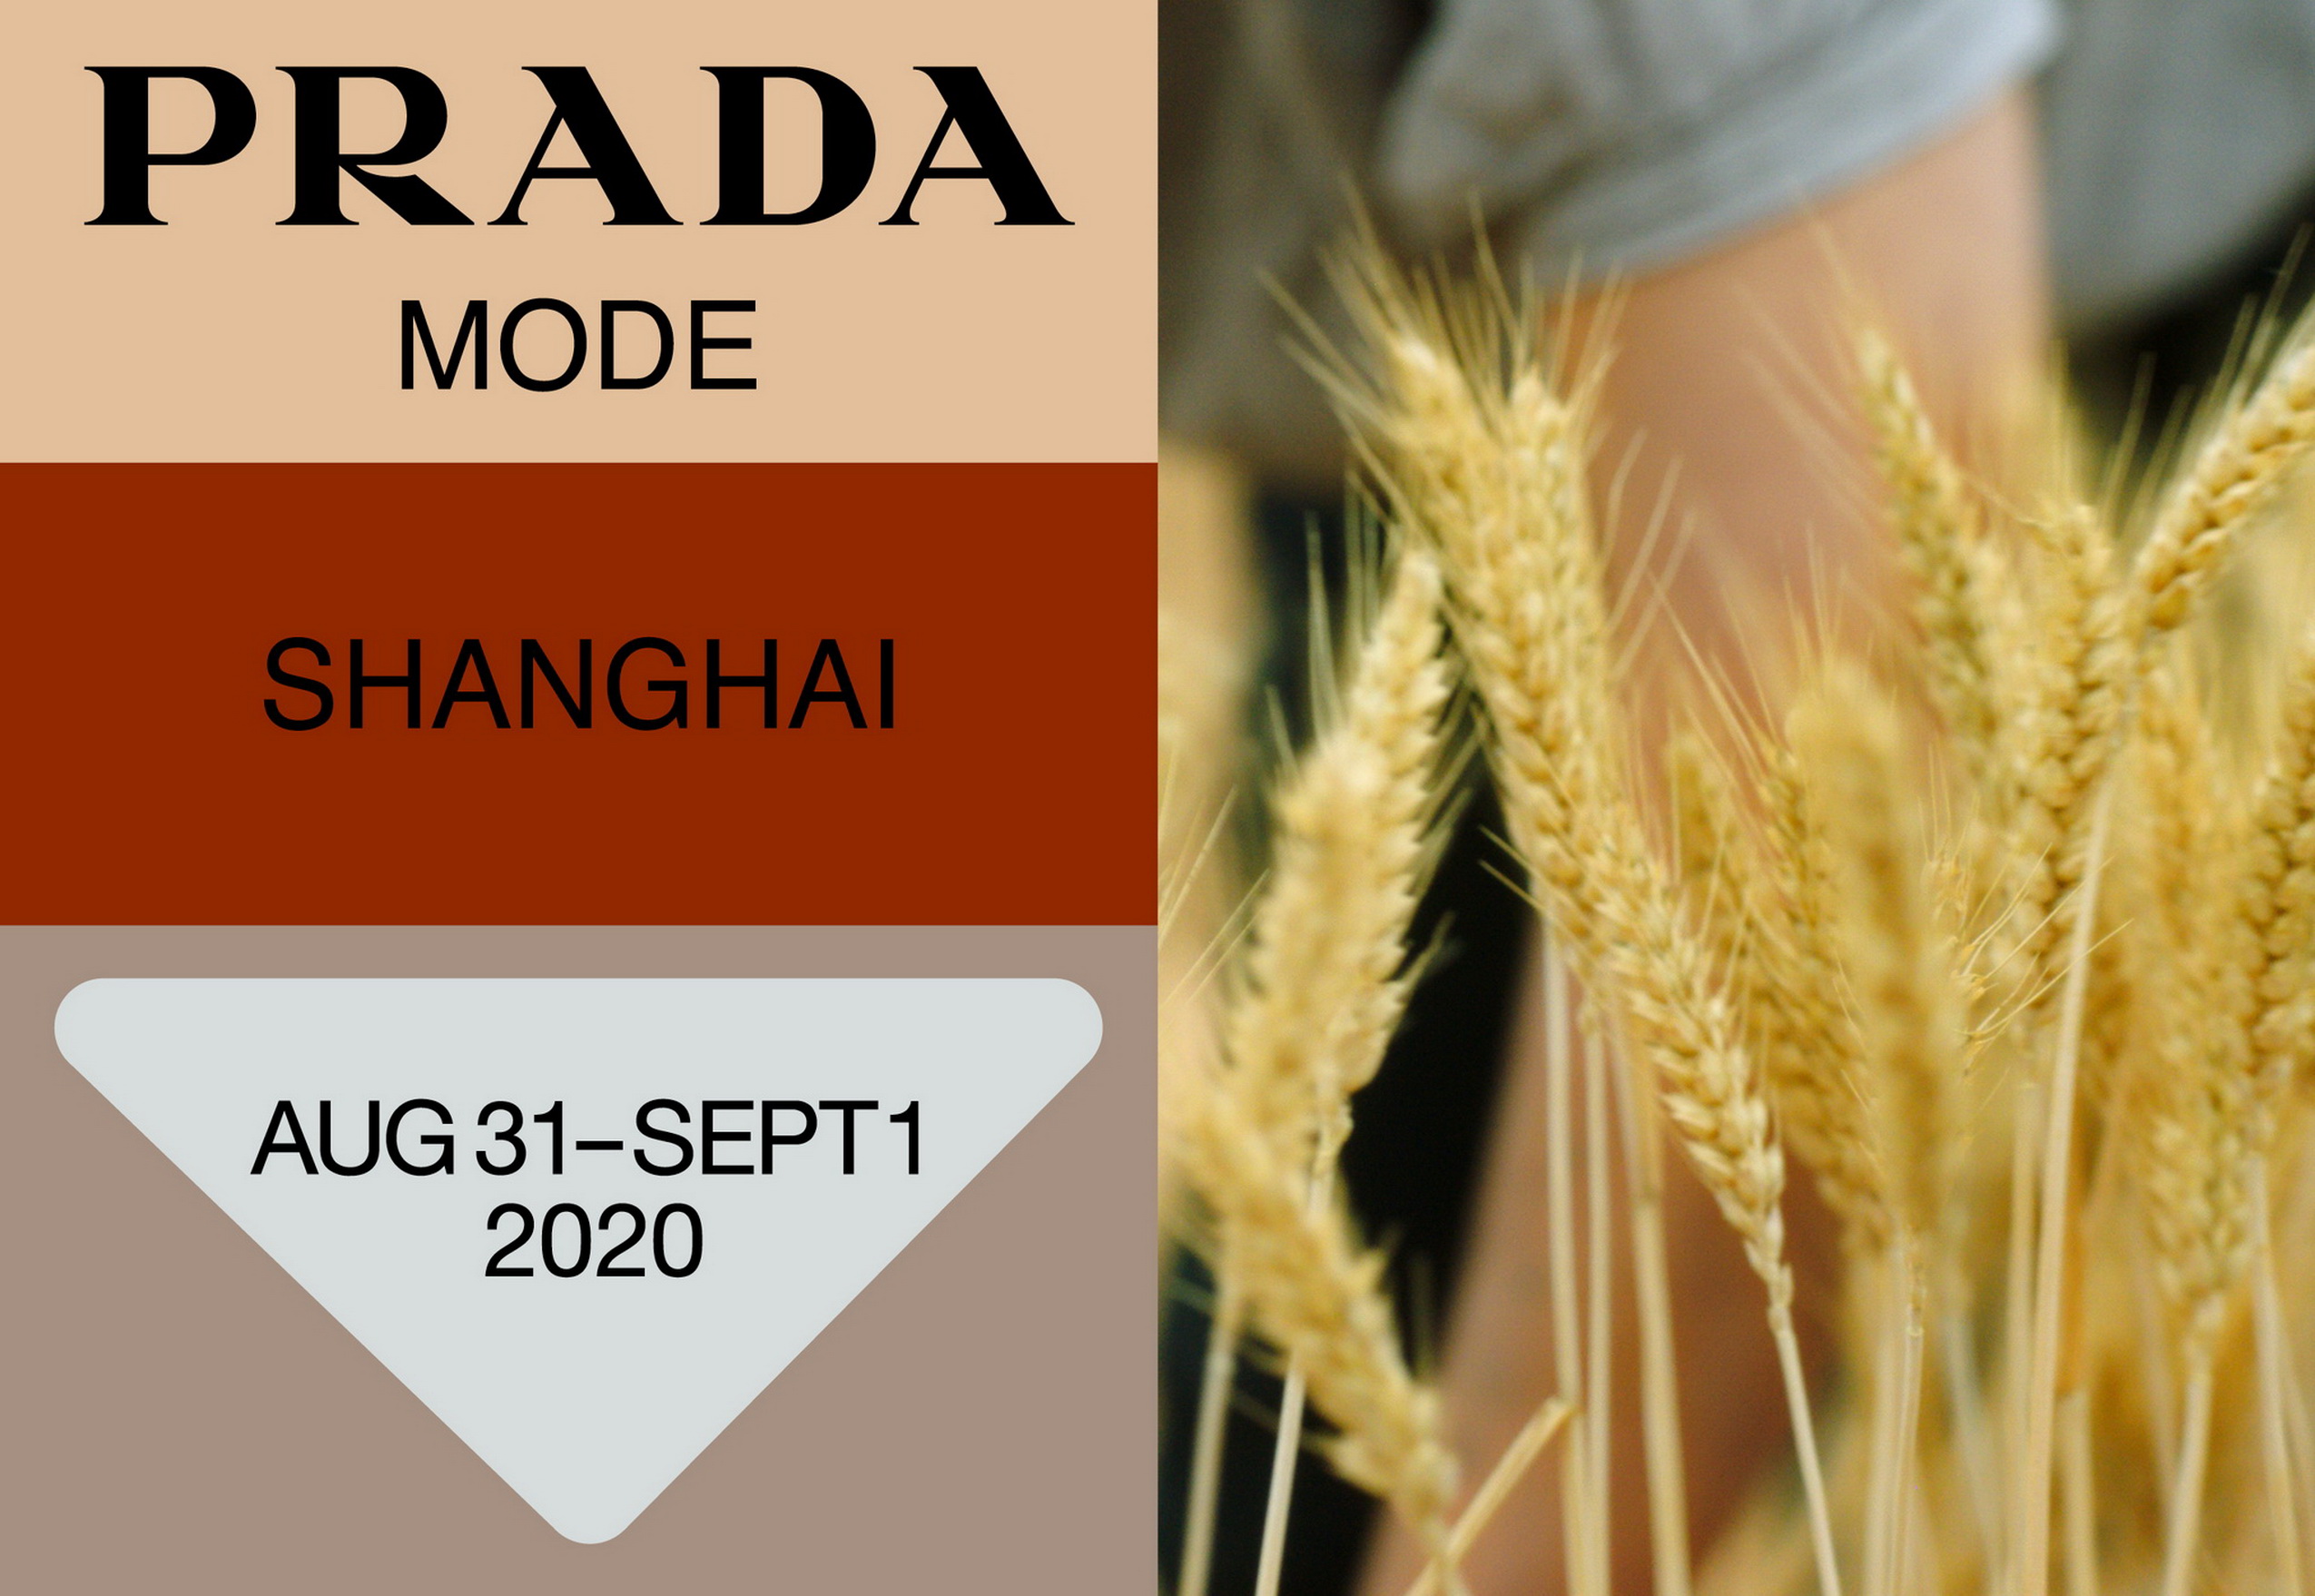 Prada и режиссер Цзя Джанкэ готовят новую главу проекта Prada Mode